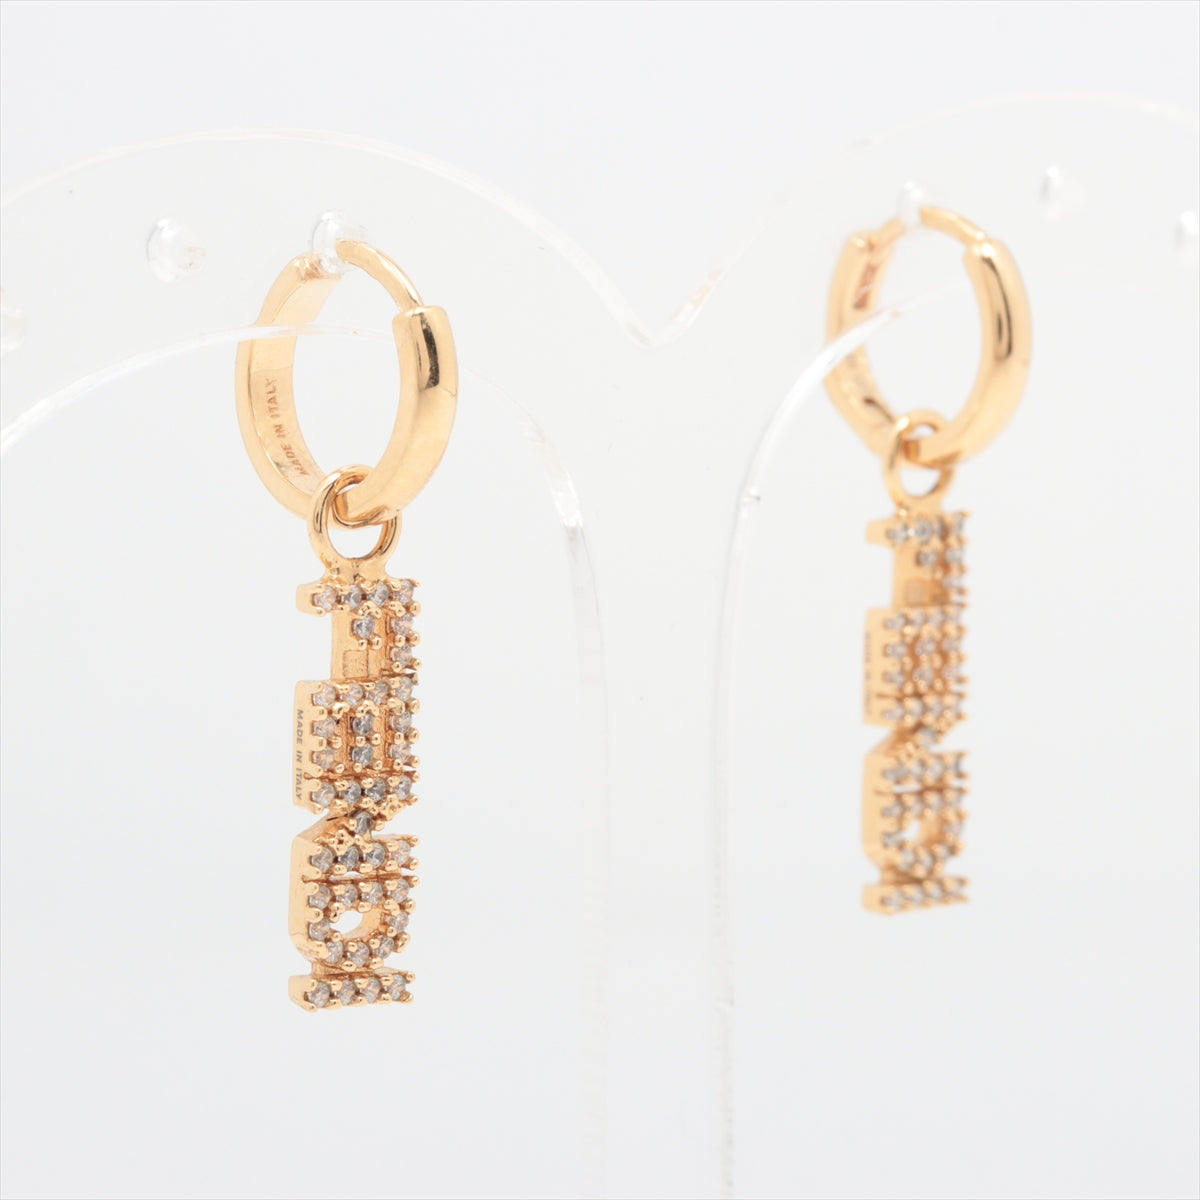 Fendi Logo Piercing jewelry (for both ears) GP×inestone Gold